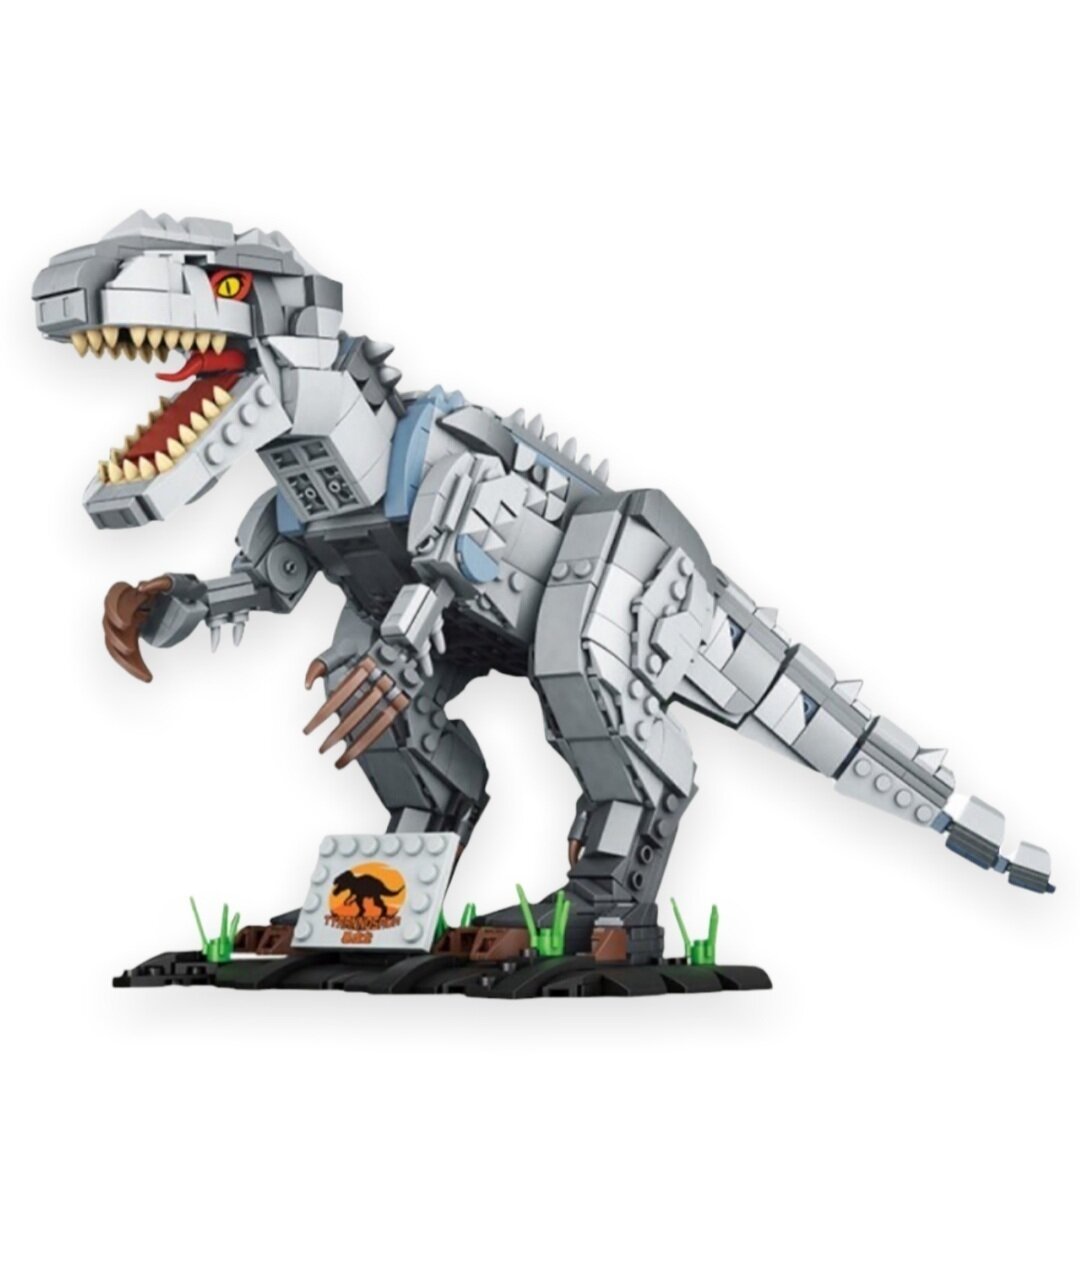 Forange Block - 993 Piece Tyrannosaur Dinosaur - DIY Building Blocks Toy